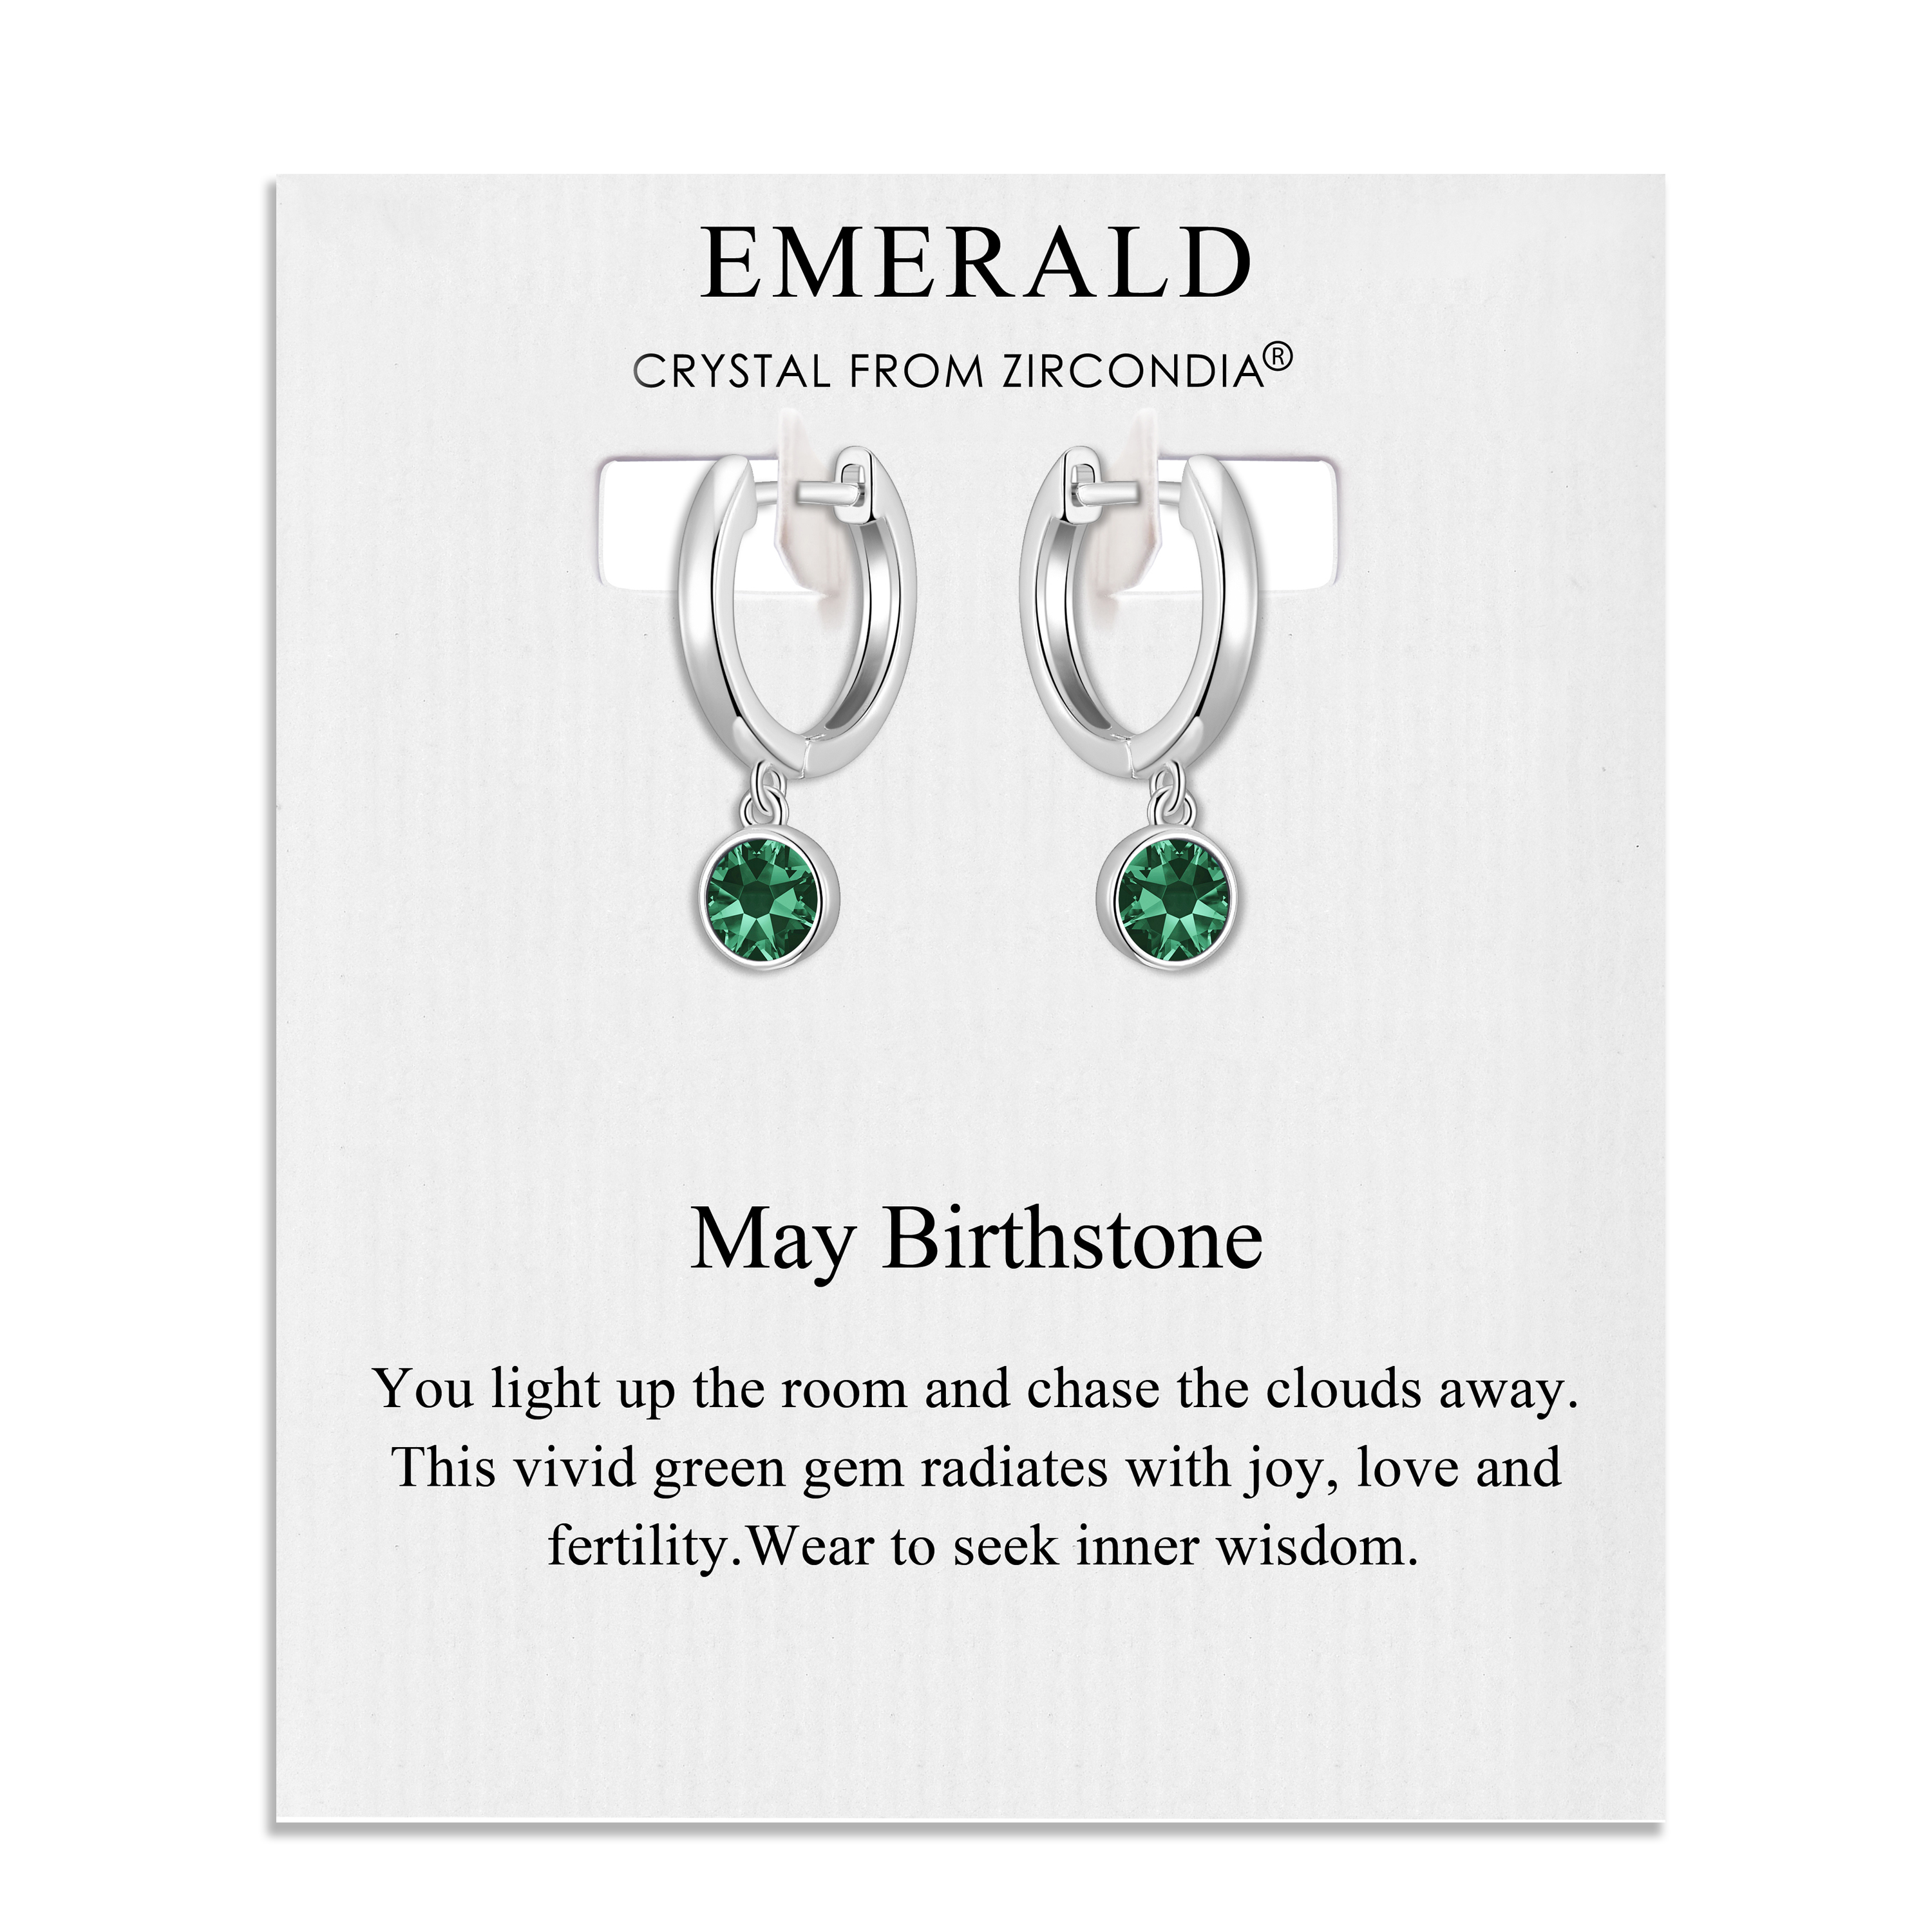 May Birthstone Hoop Earrings Created with Emerald Zircondia® Crystals by Philip Jones Jewellery